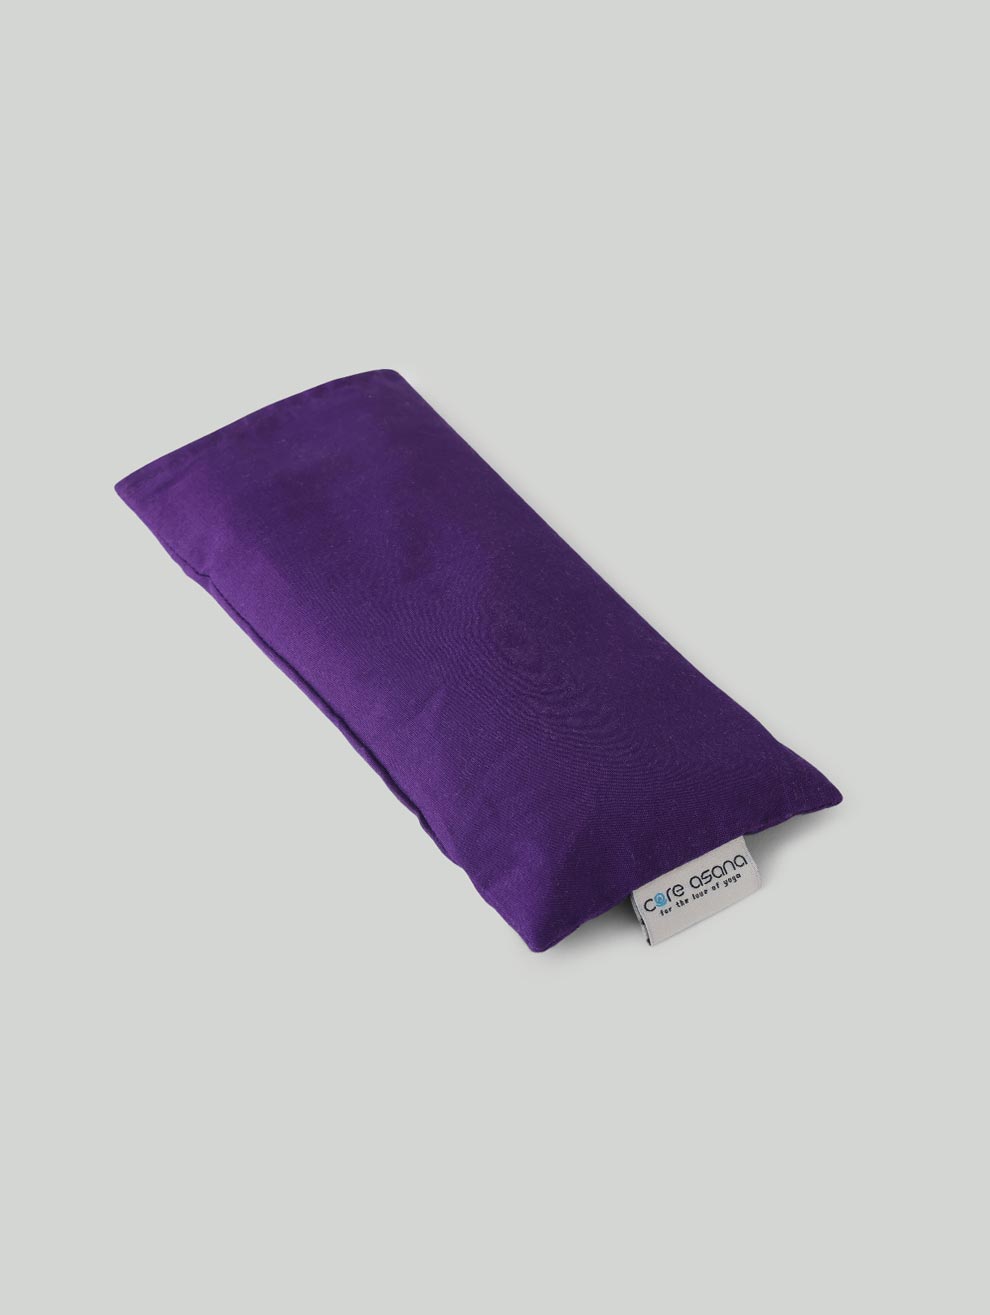 Buy Violet Eye Pillow online